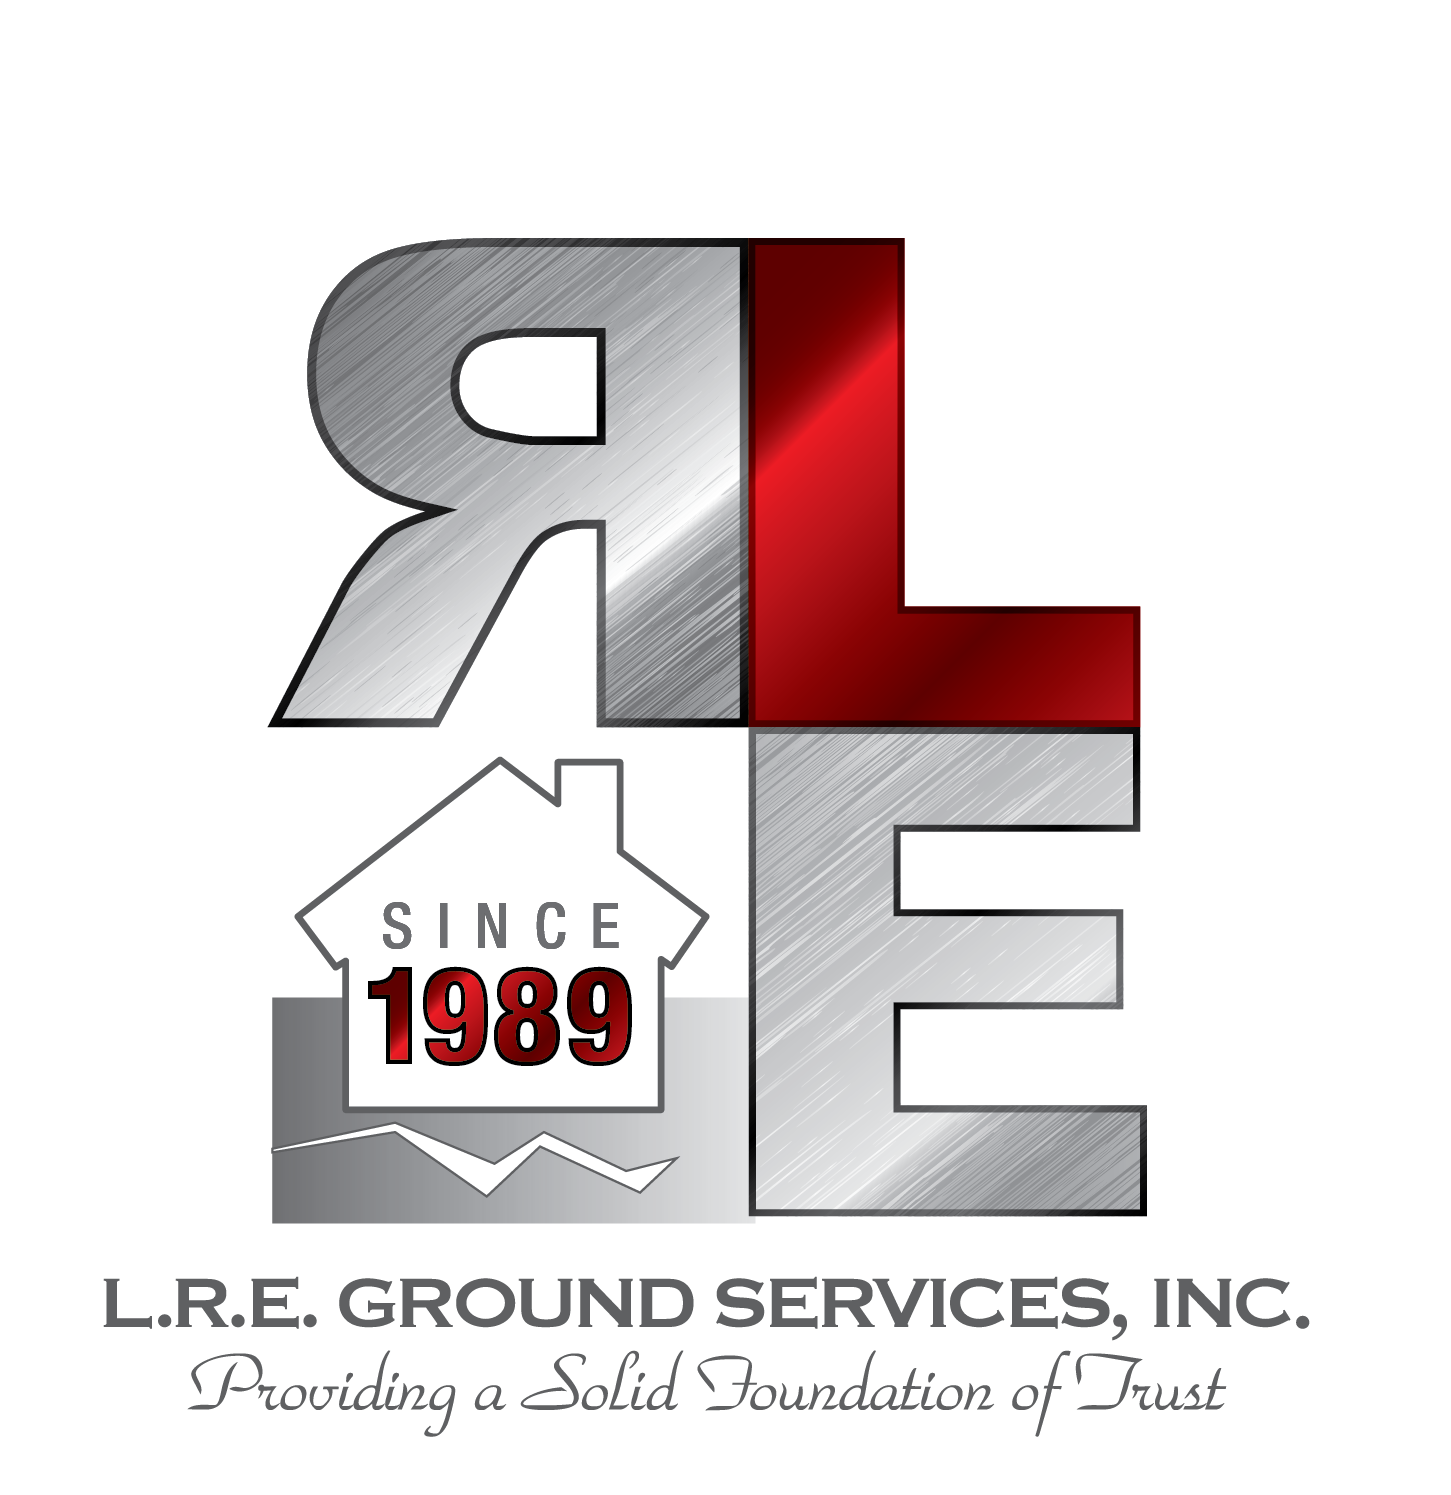 LRE Foundation Repair, LLC Logo